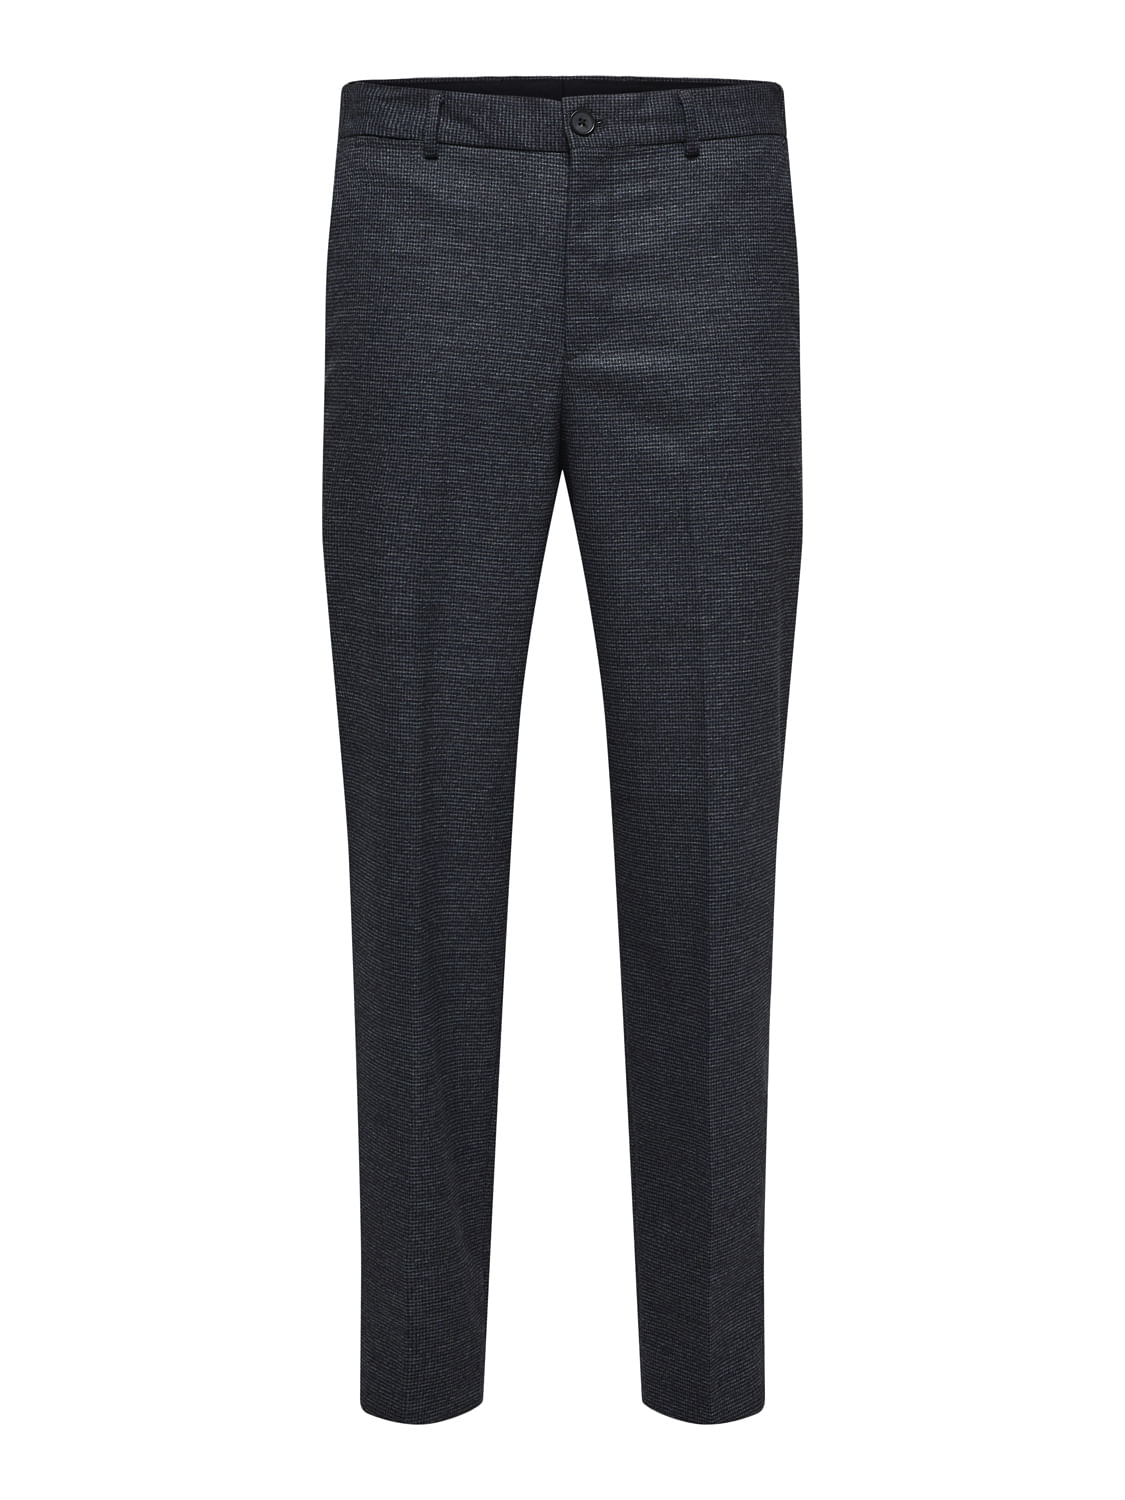 Charcoal Grey Herringbone Pants Suitsforme.com